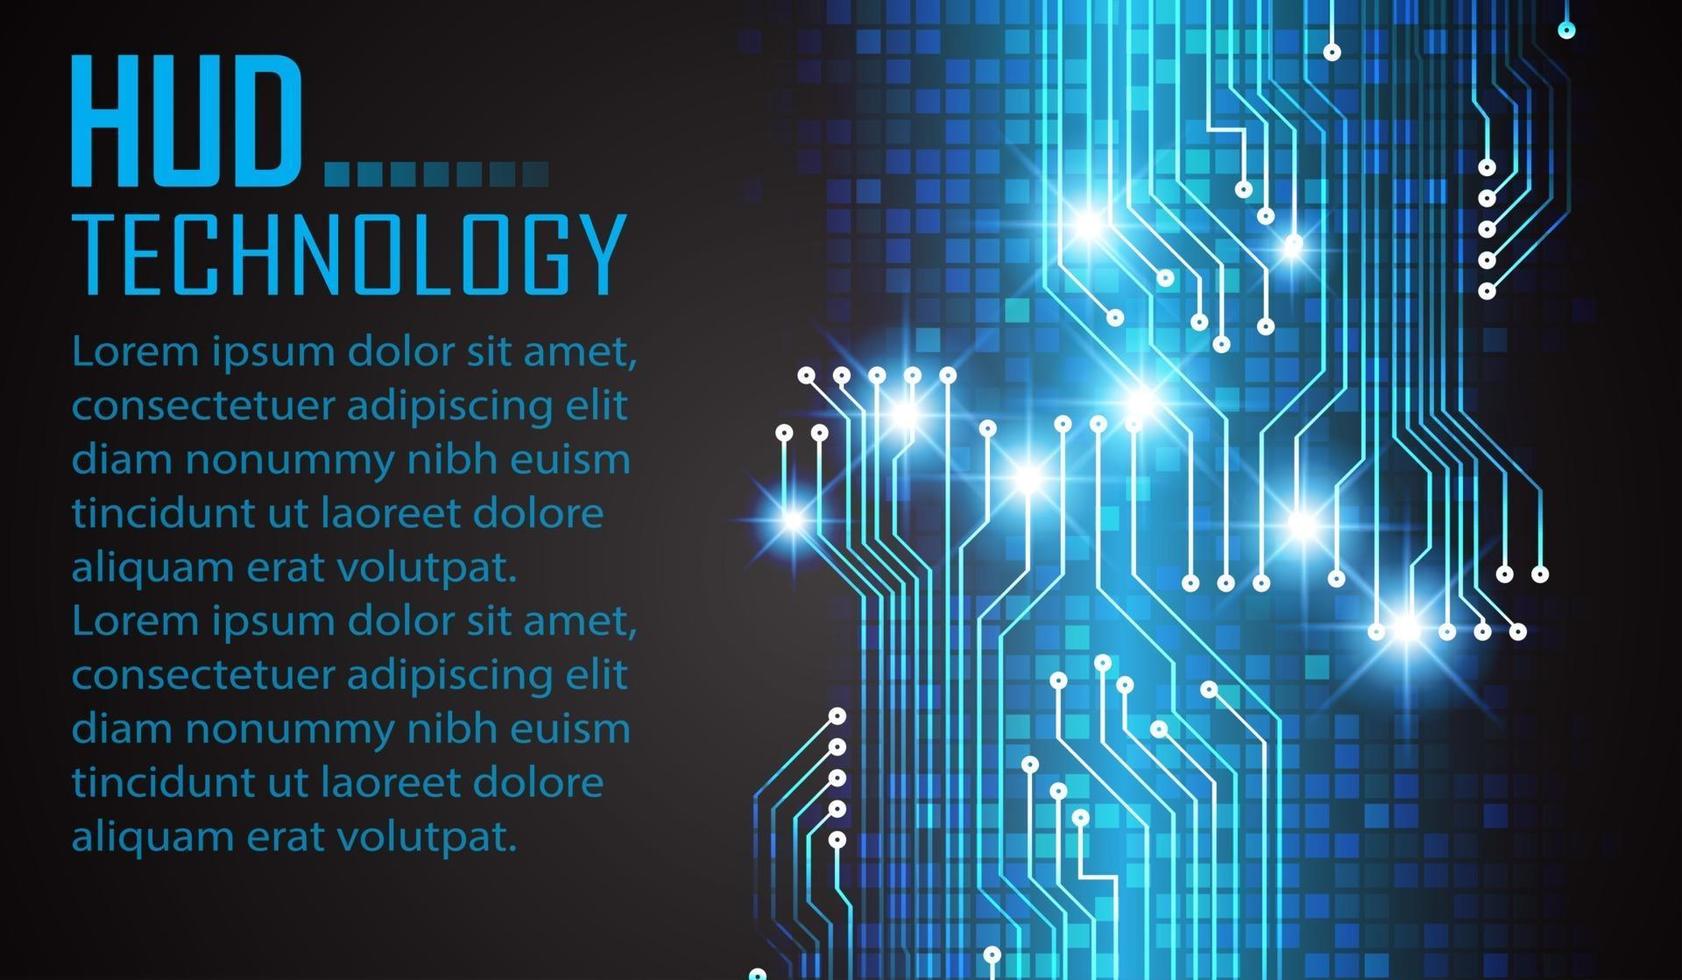 text cyber krets framtida teknik koncept bakgrund vektor